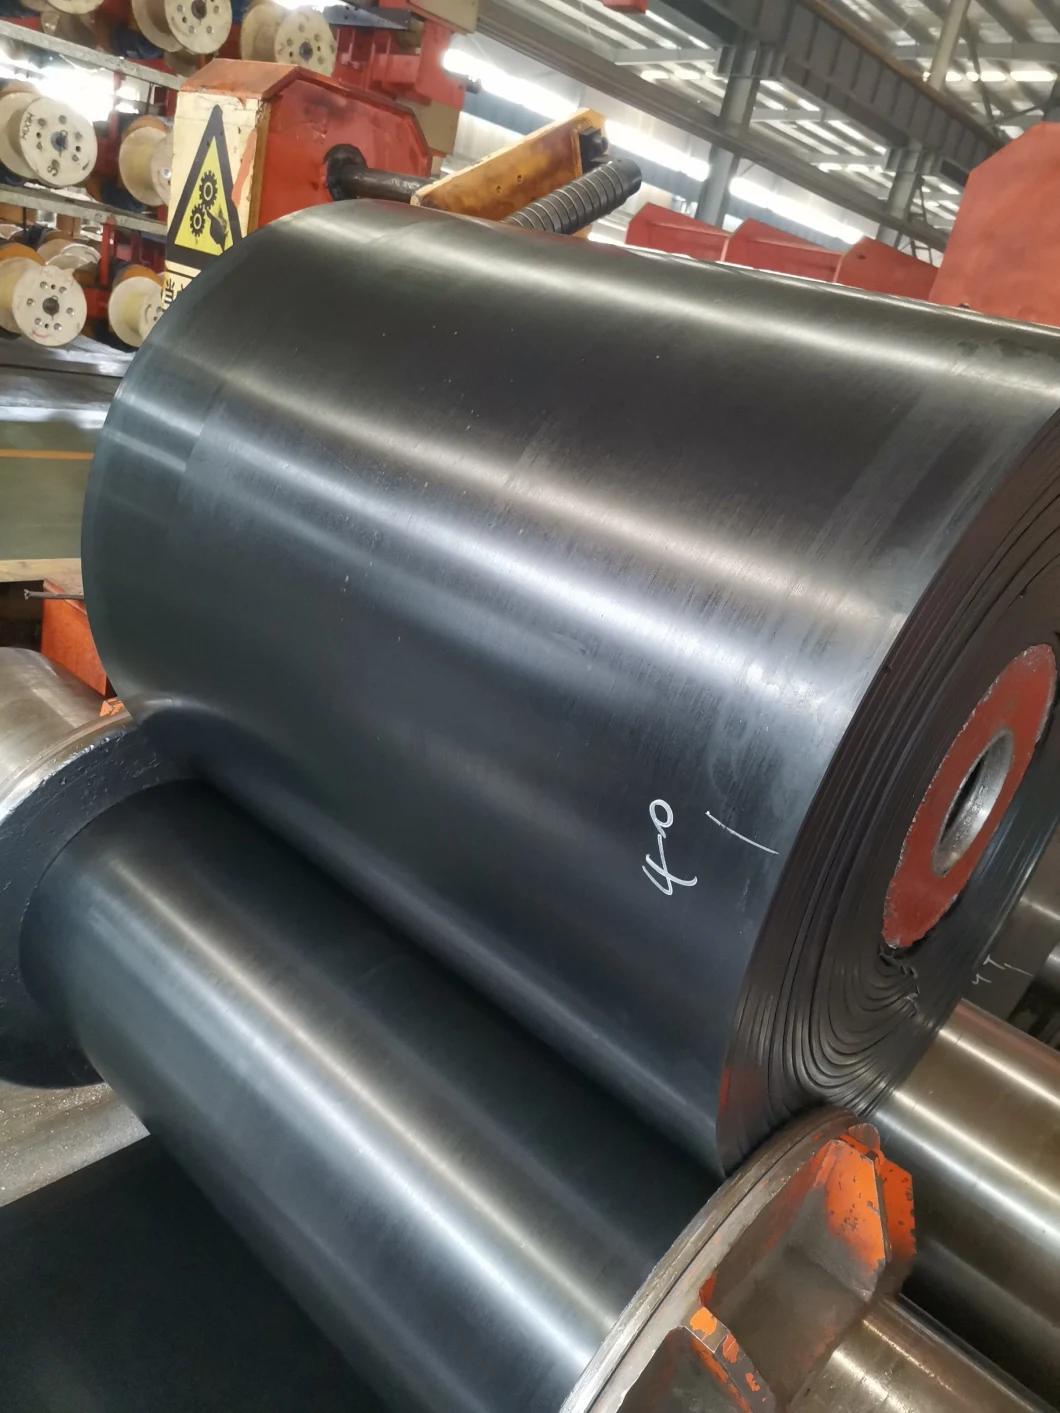 Rubber Fabric Polyester Ep/Nn/Ee/Piw DIN Industrial Heat/Tear/Wear/Fire Resistant Conveyor Belt for Bulk Material Handling